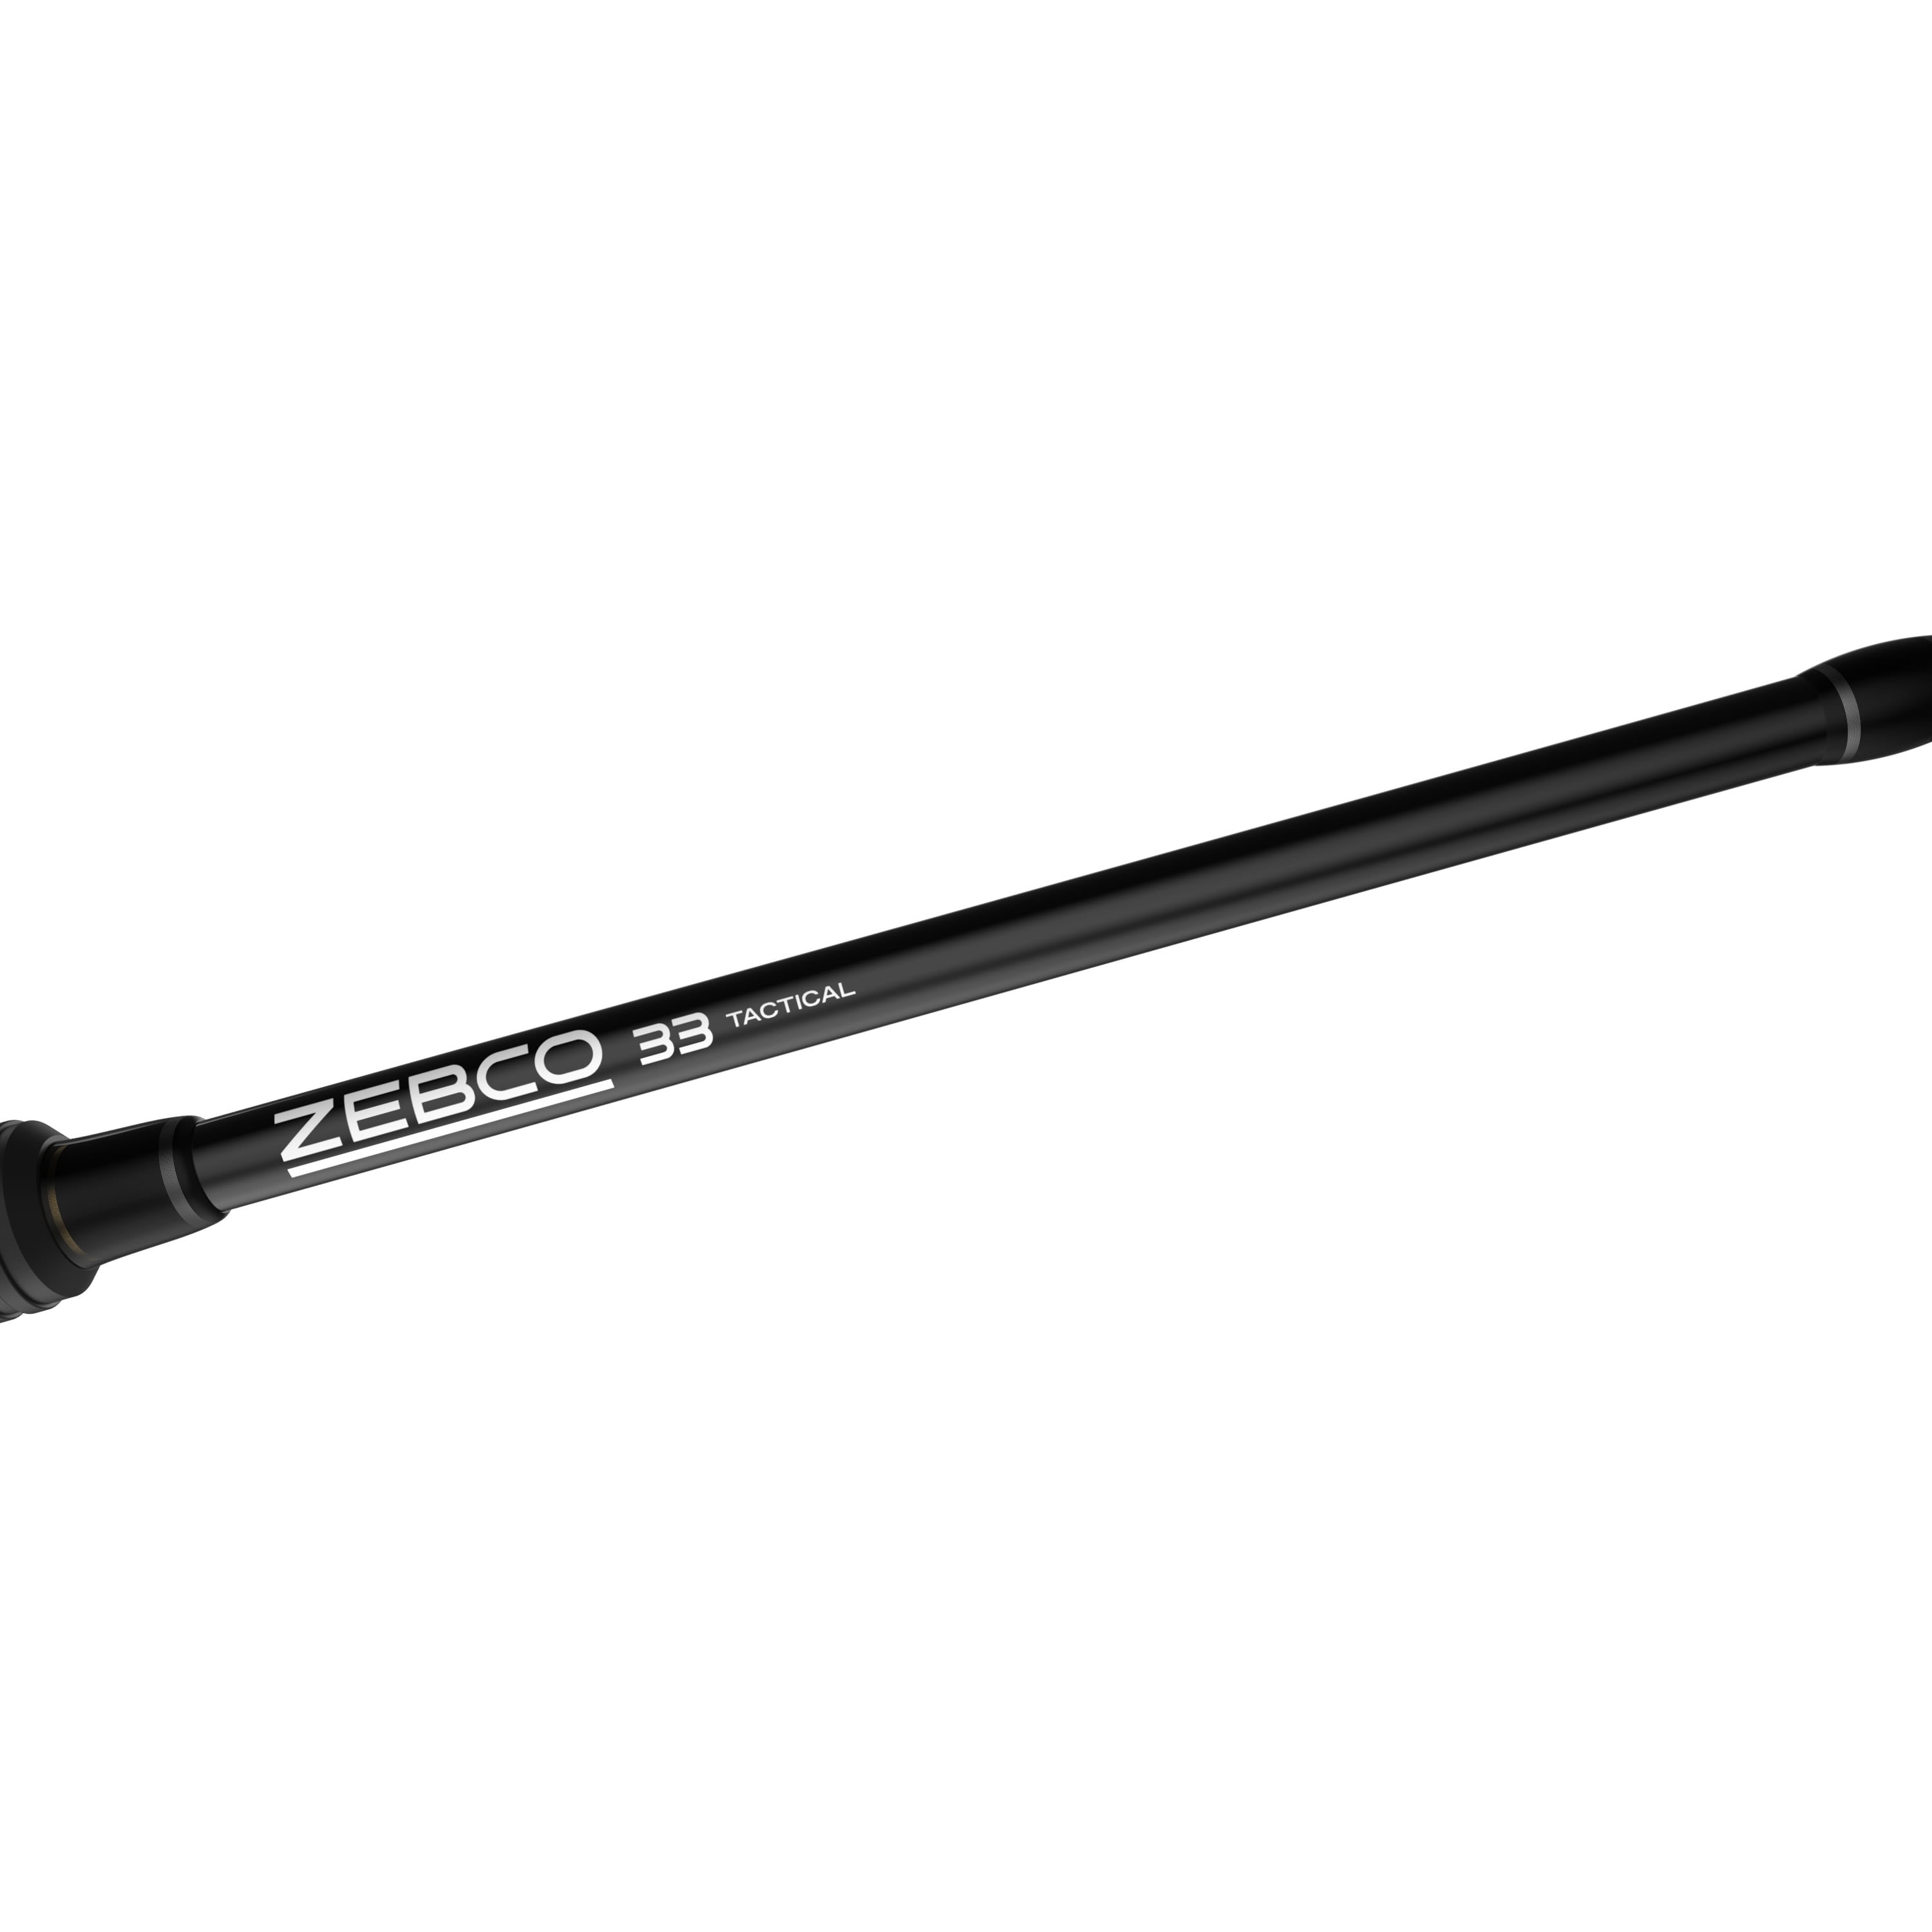 Zebco 33 Tactical Spincast Reel and Fishing Rod Combo - Walmart